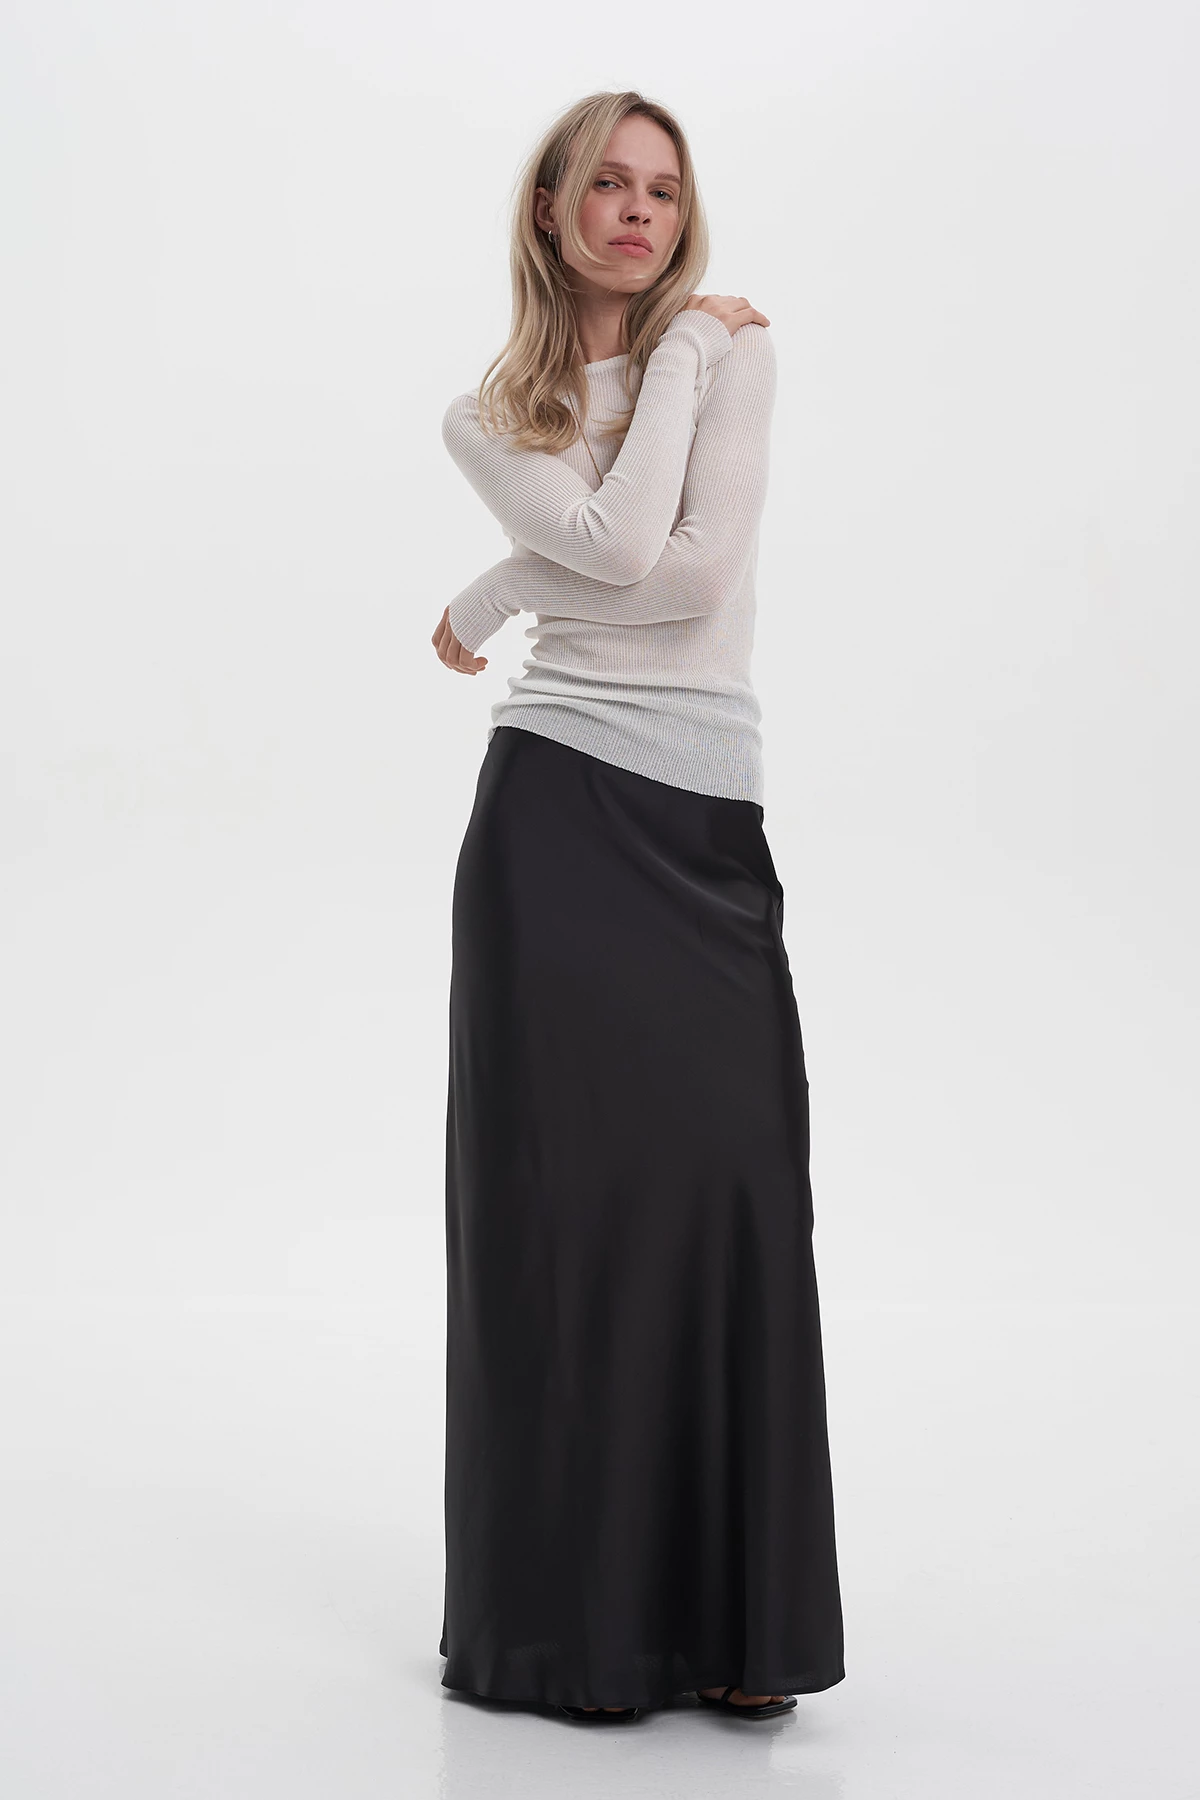 Black satin maxi skirt, photo 1